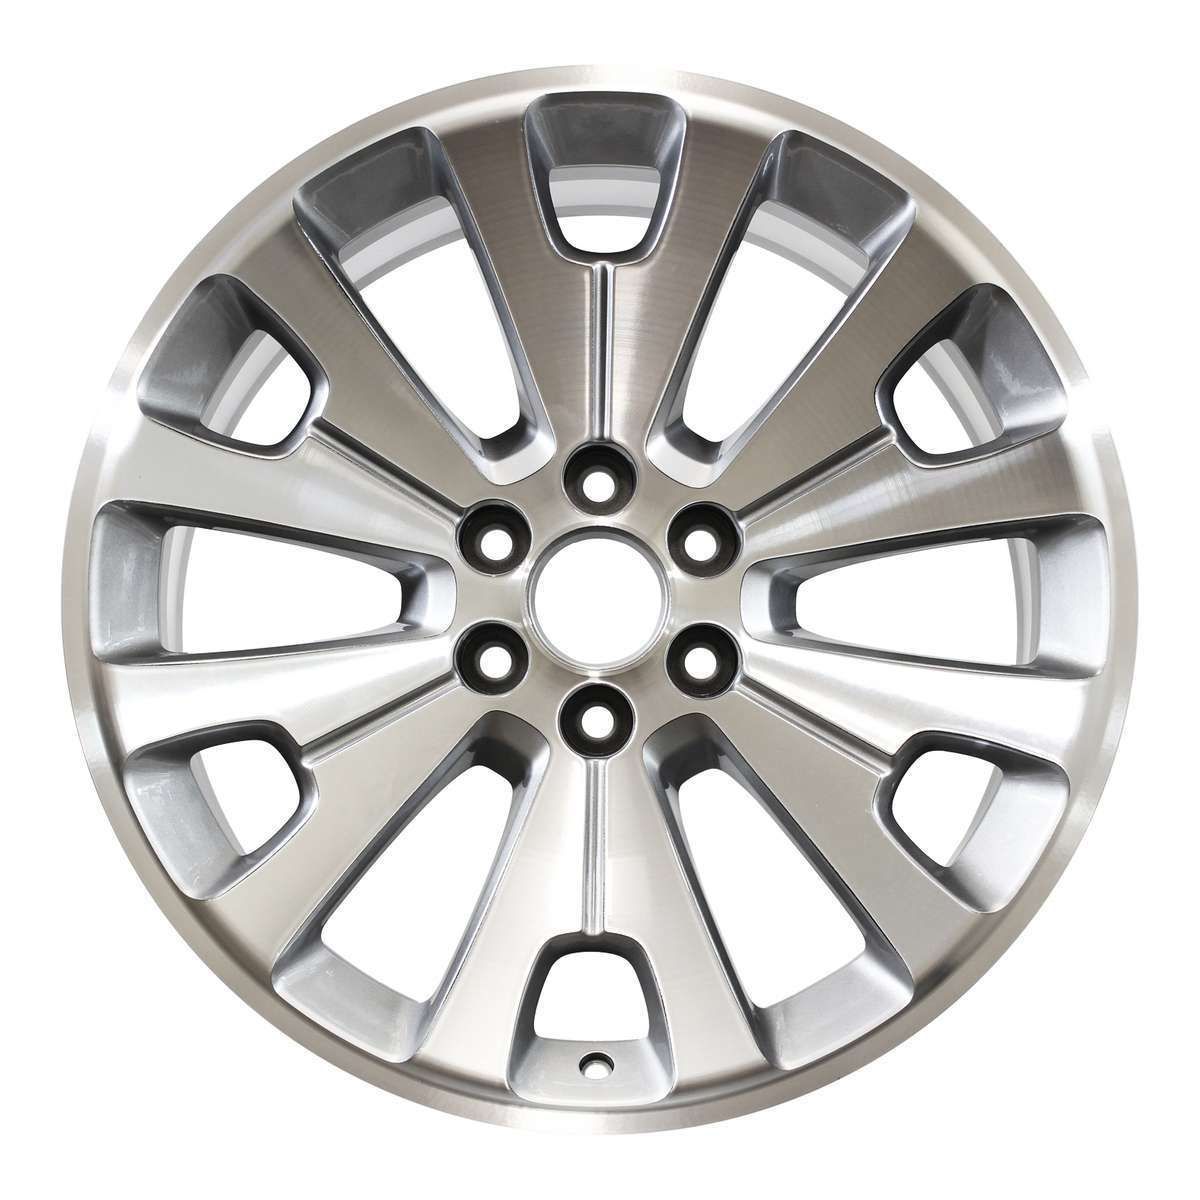 2014 Chevrolet Silverado 1500 22" OEM Wheel Rim W5663MS